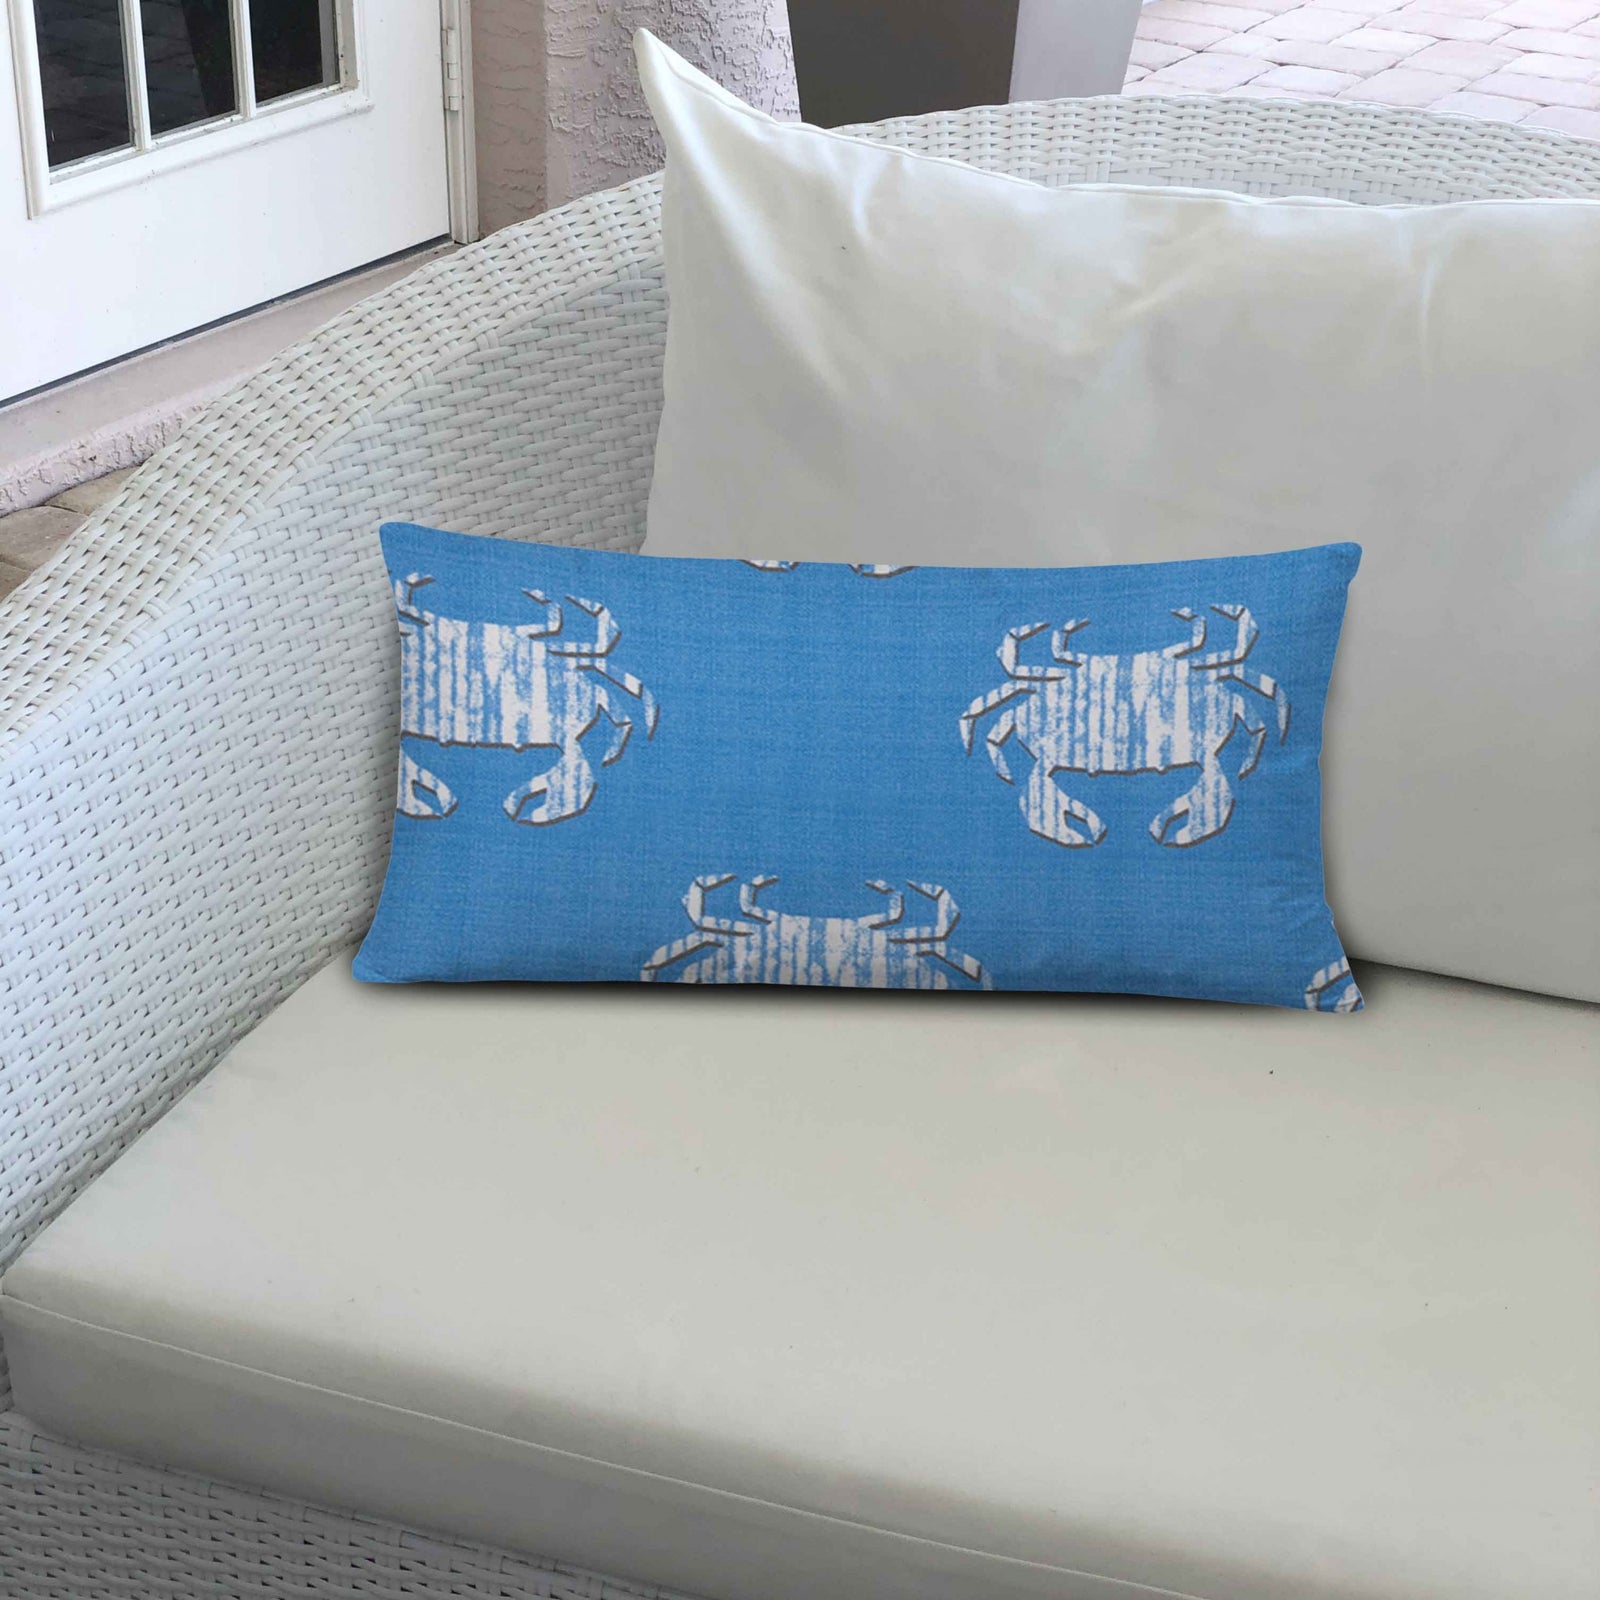 14" X 24" Blue And White Crab Enveloped Coastal Lumbar Indoor Outdoor Pillow